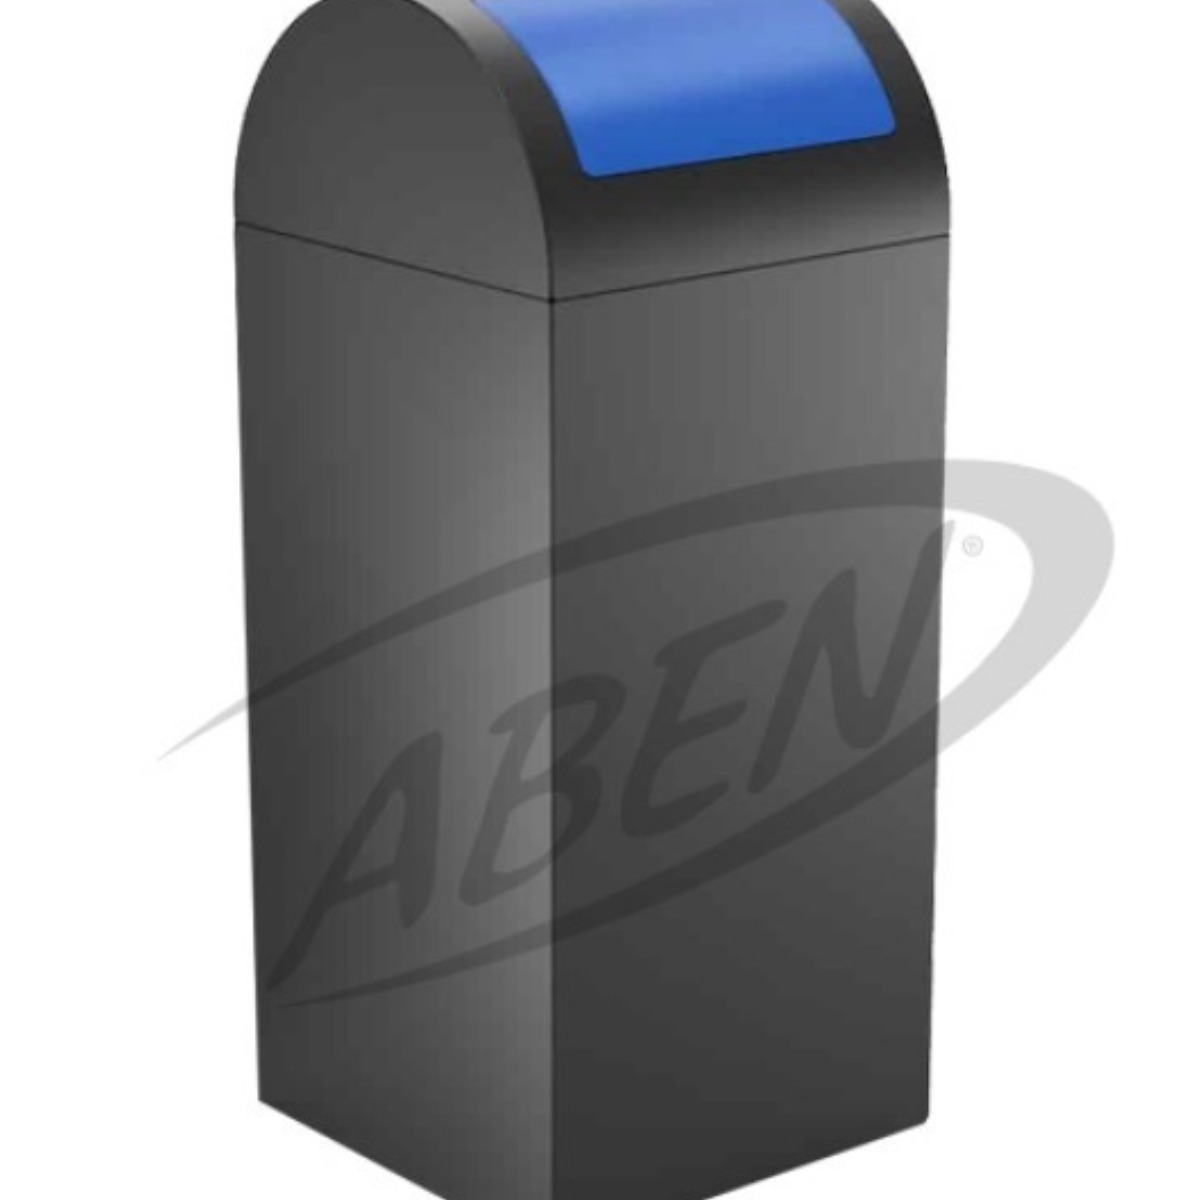 AB-764 Recycle Bin product logo